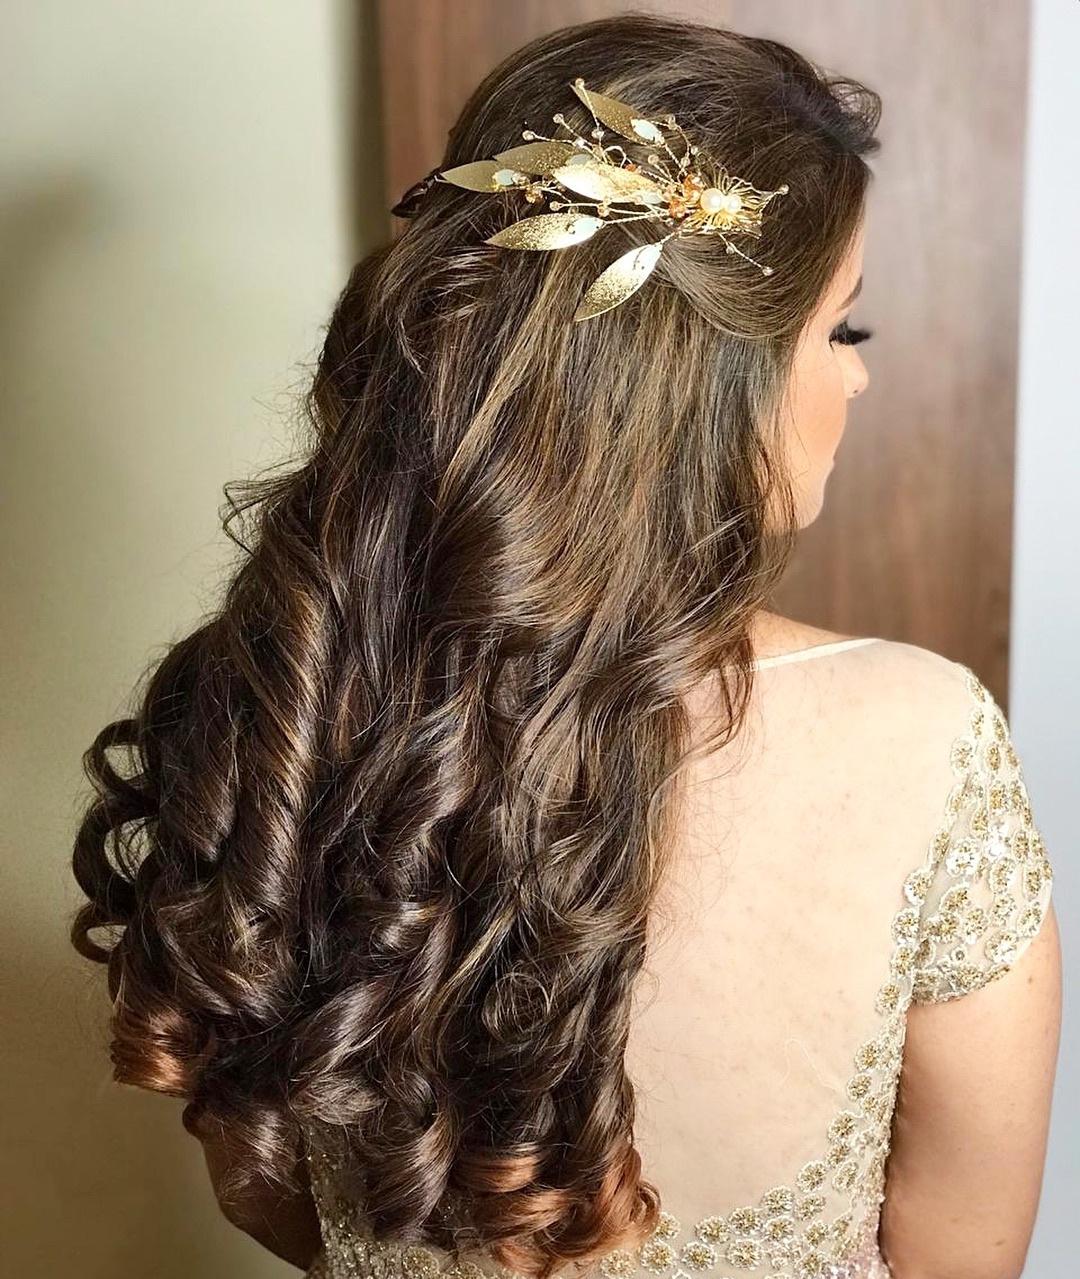 3 short hairstyles for Indian weddings {Delhi fashion blogger} - YouTube